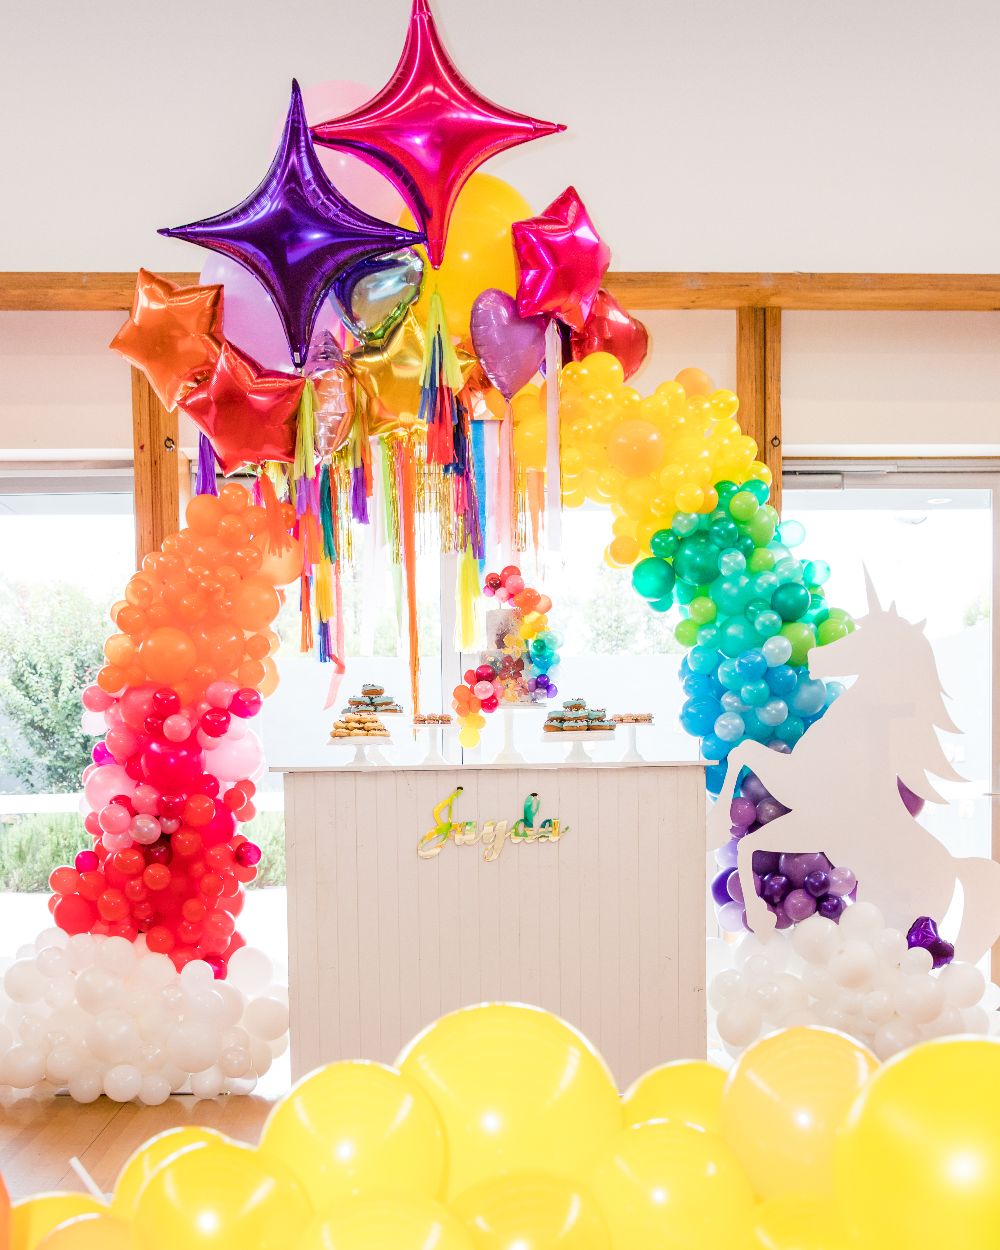 Dessert table with intricate handmade desserts, unicorn cake, rainbow balloon arch and unicorn.